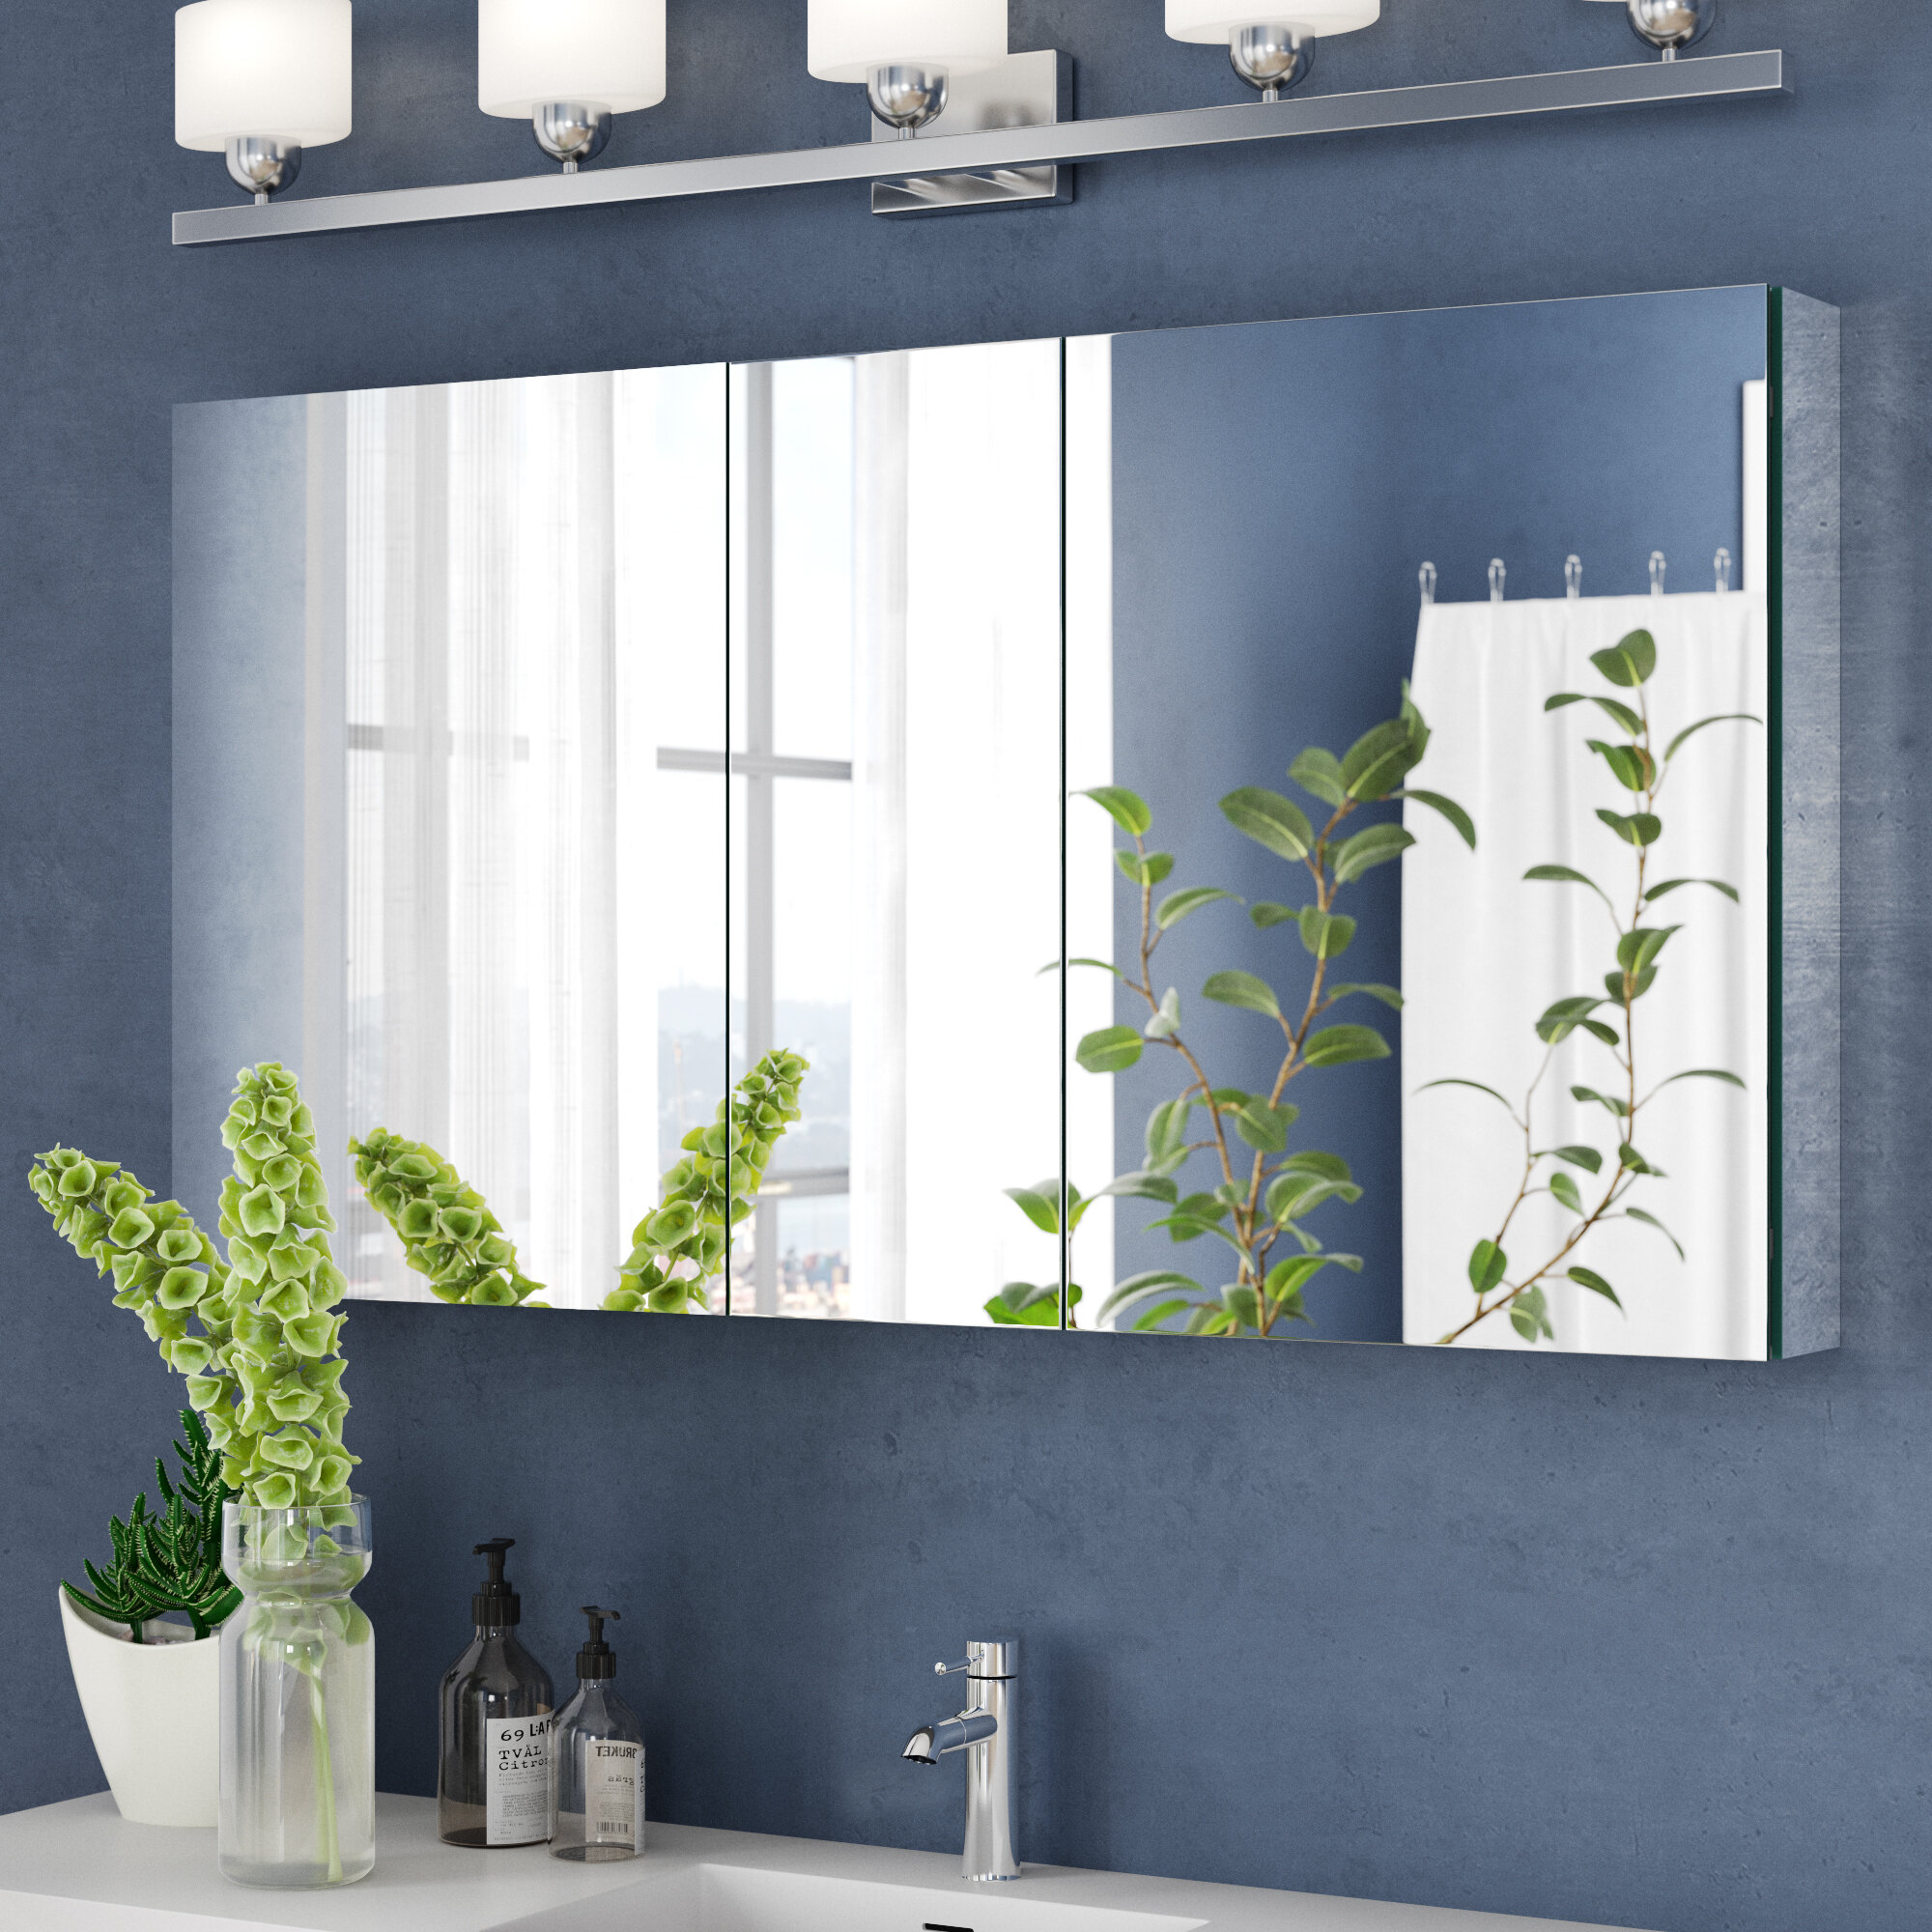 Mirrored Door Medicine Cabinet Bathroom Wall Storage Adjustable